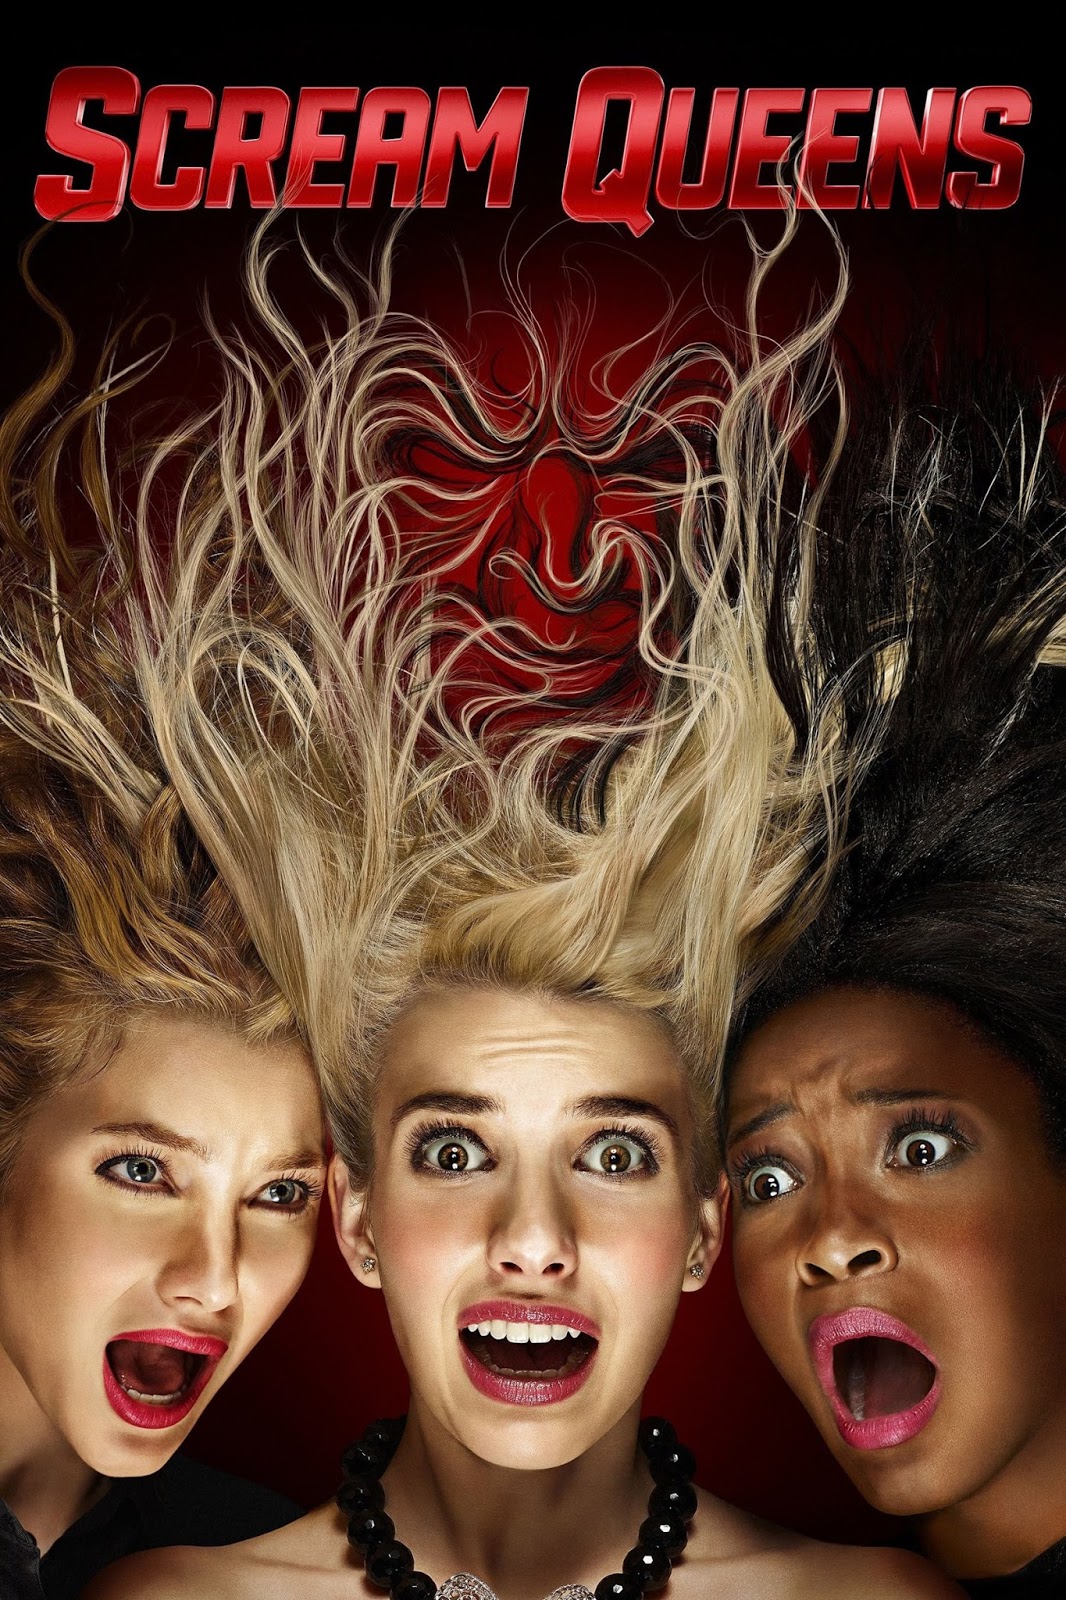 Scream Queens 2015: Season 1